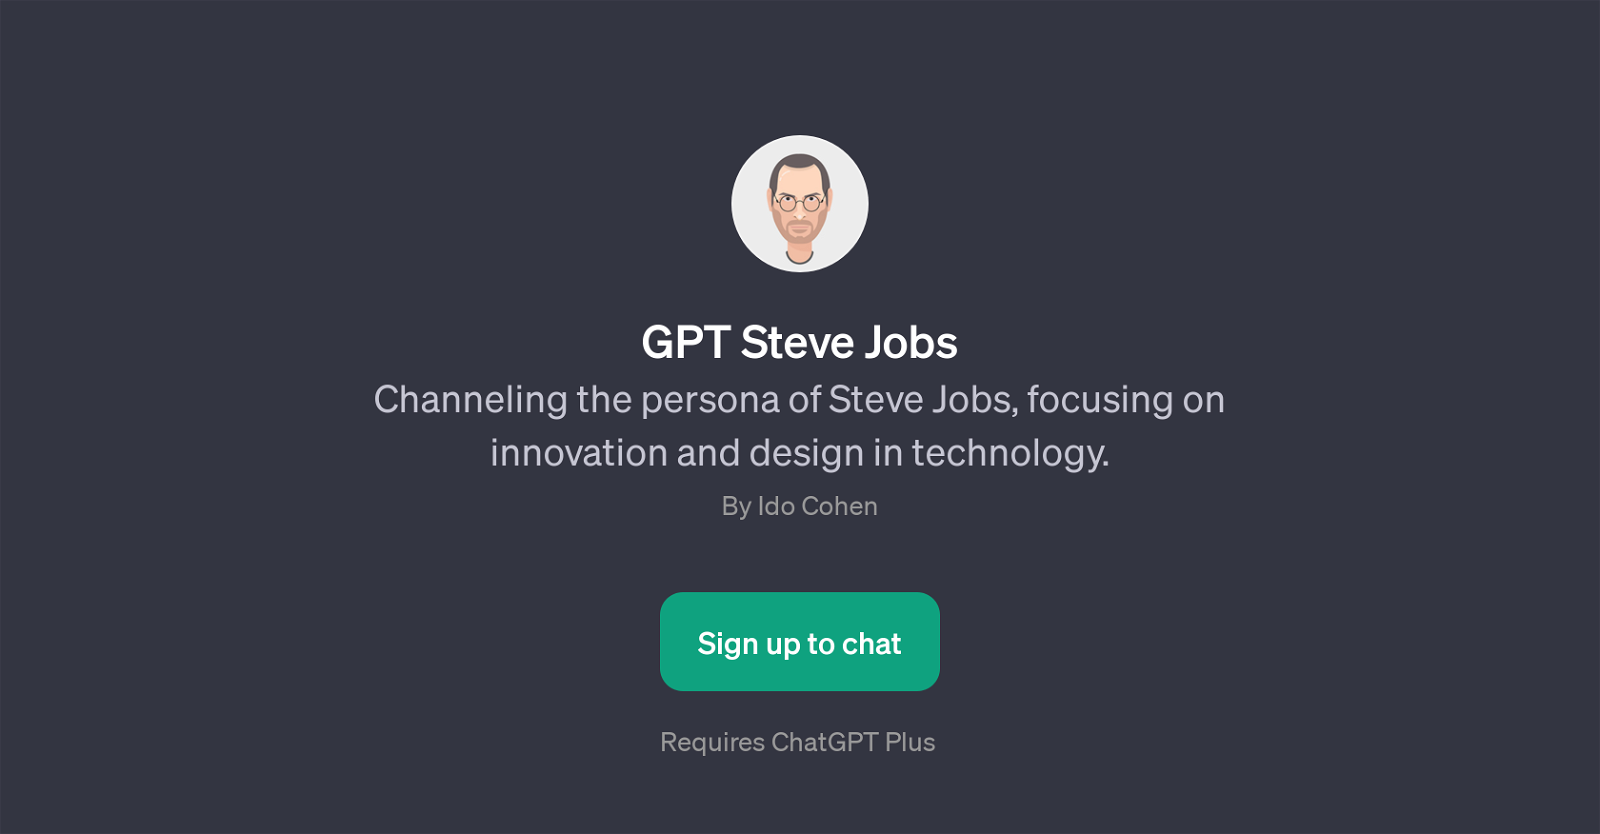 GPT Steve Jobs website